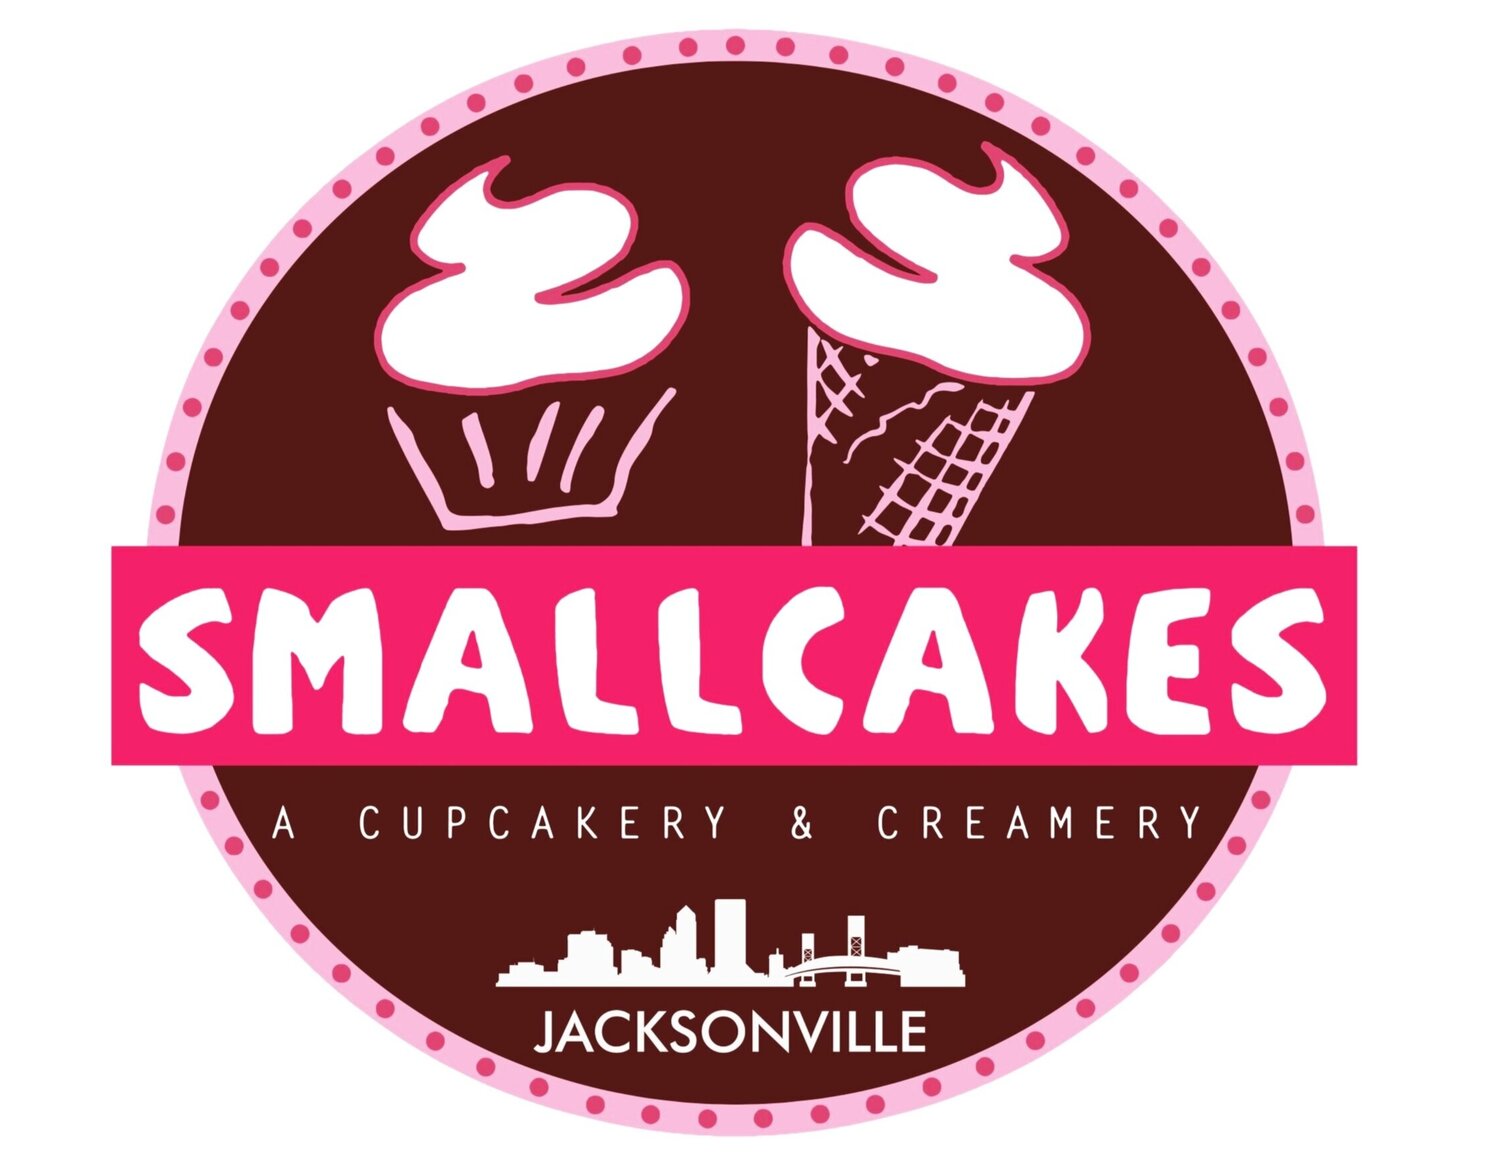 Smallcakes Cupcakery and Creamery: Jacksonville